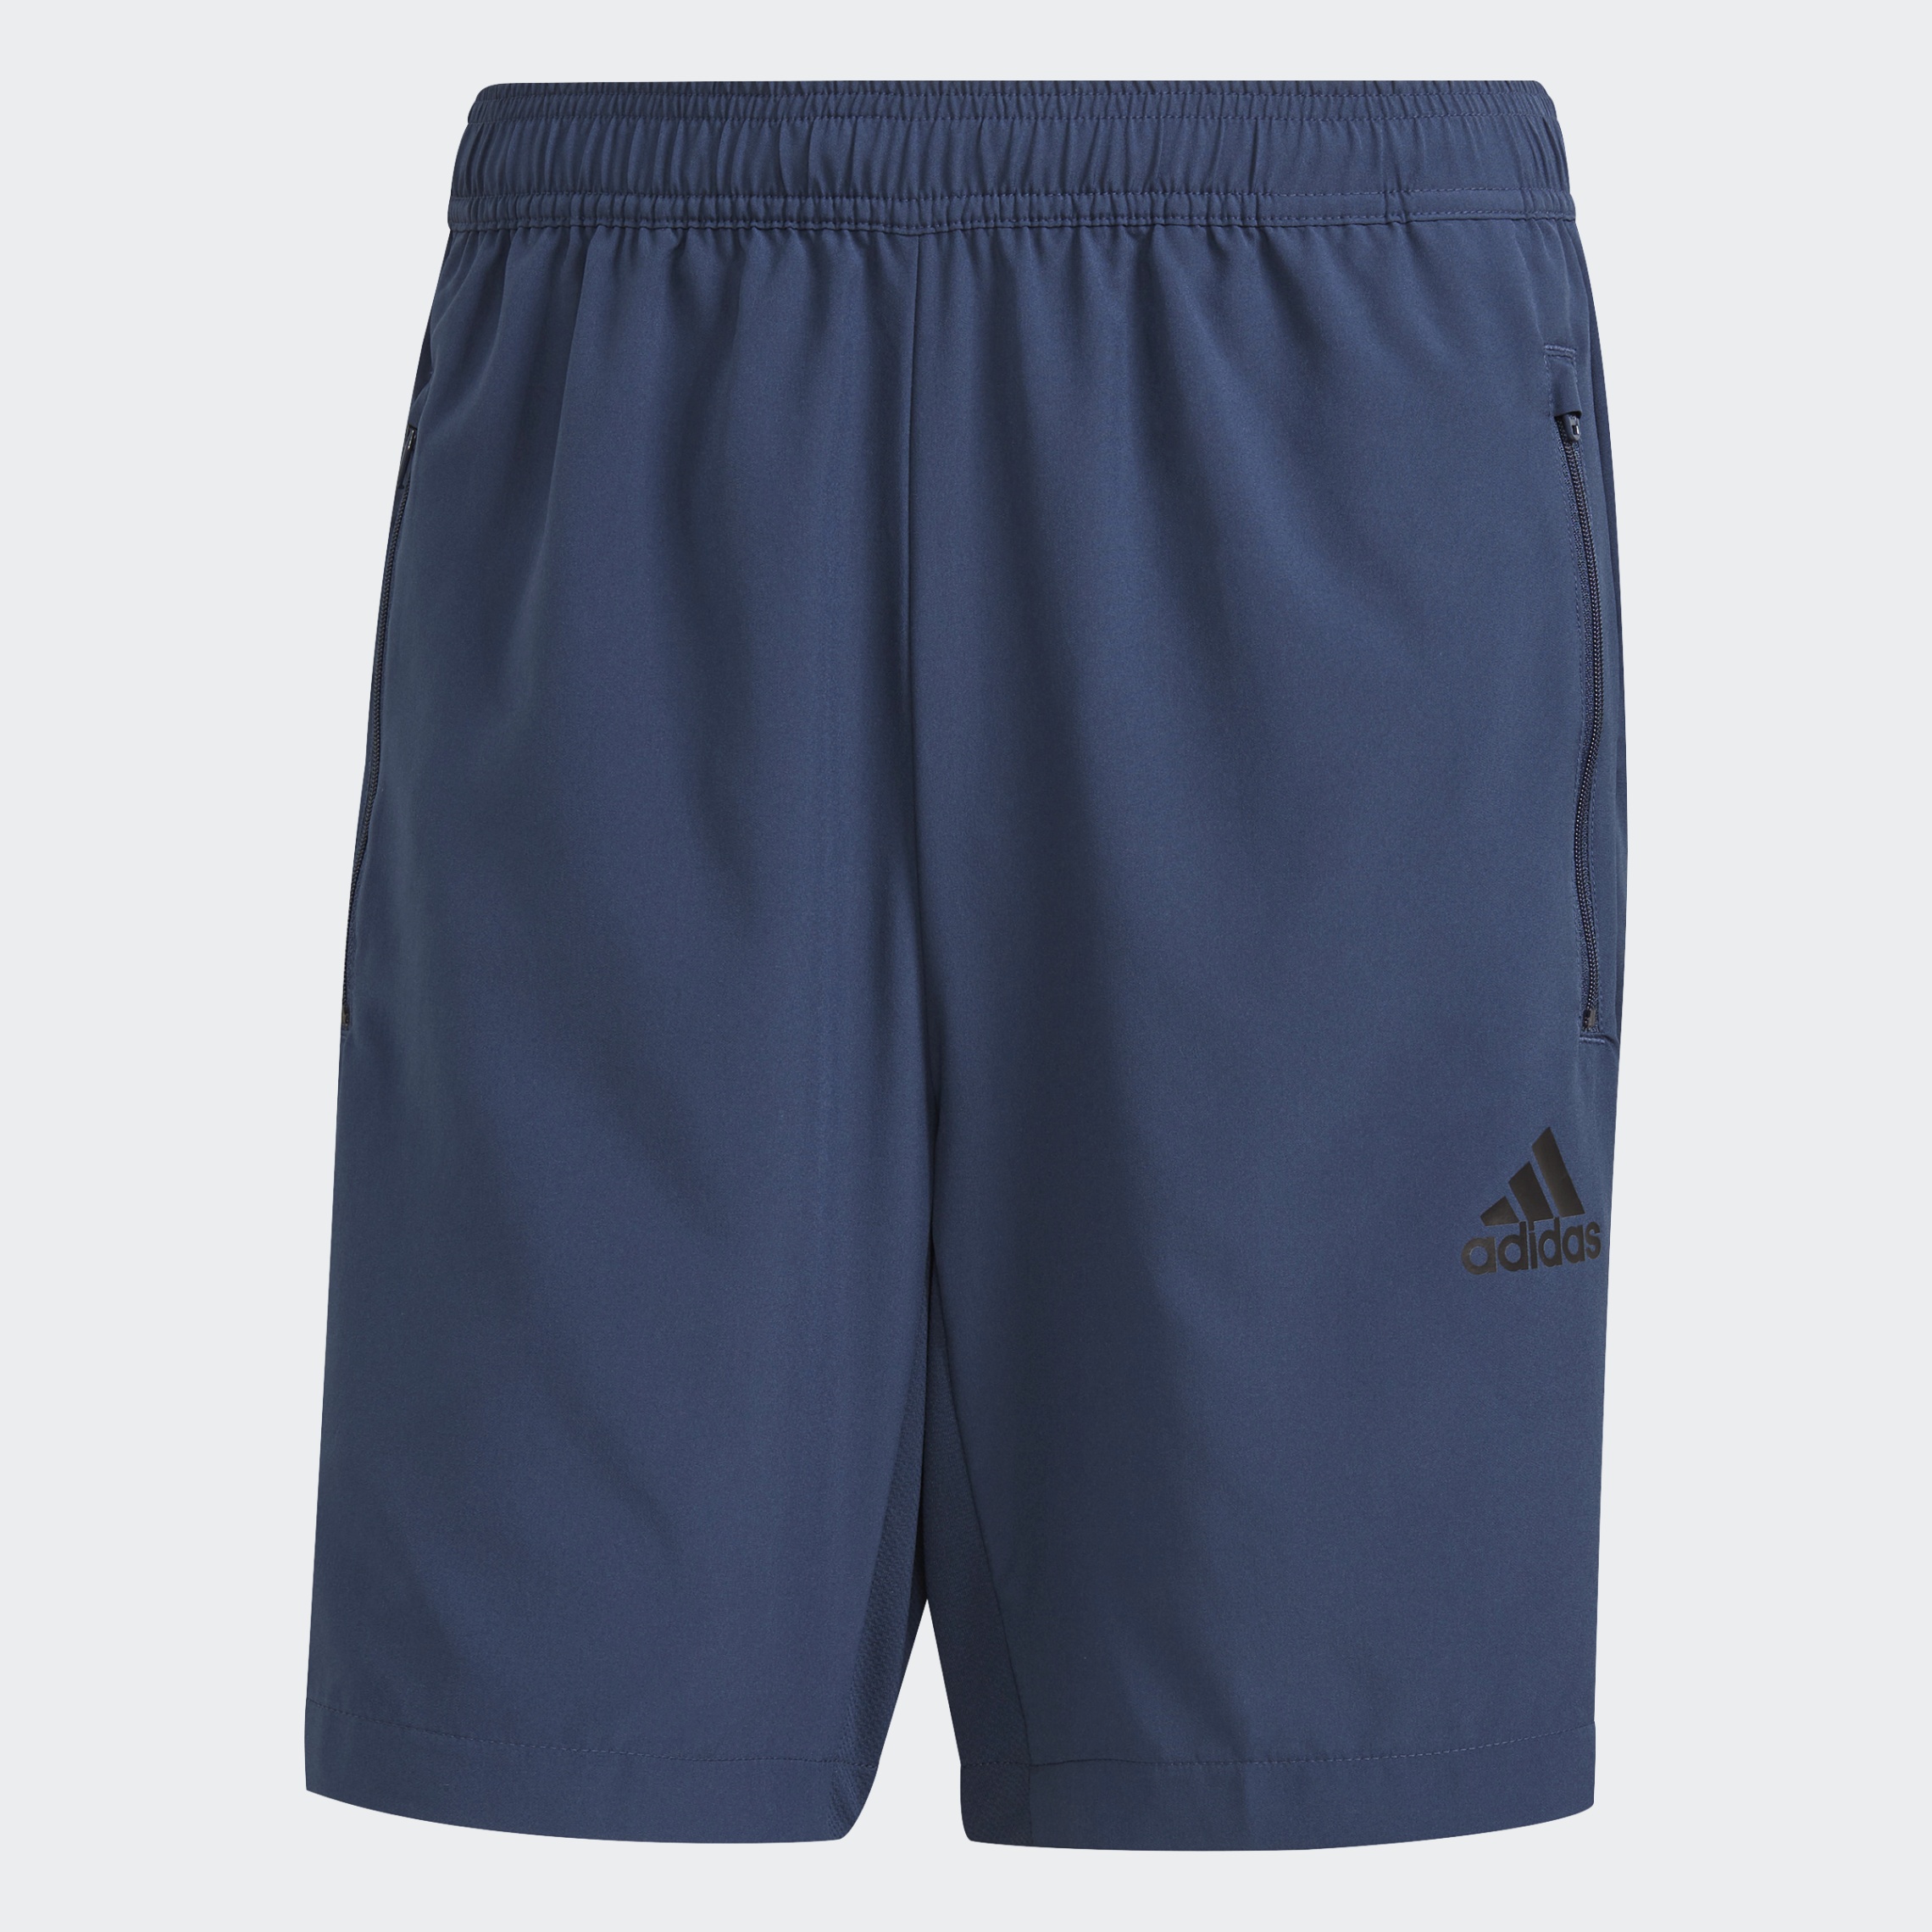 aeroready designed to move woven sport shorts Bulan 3 adidas men AEROREADY Designed to Move Woven Sport Shorts  eBay